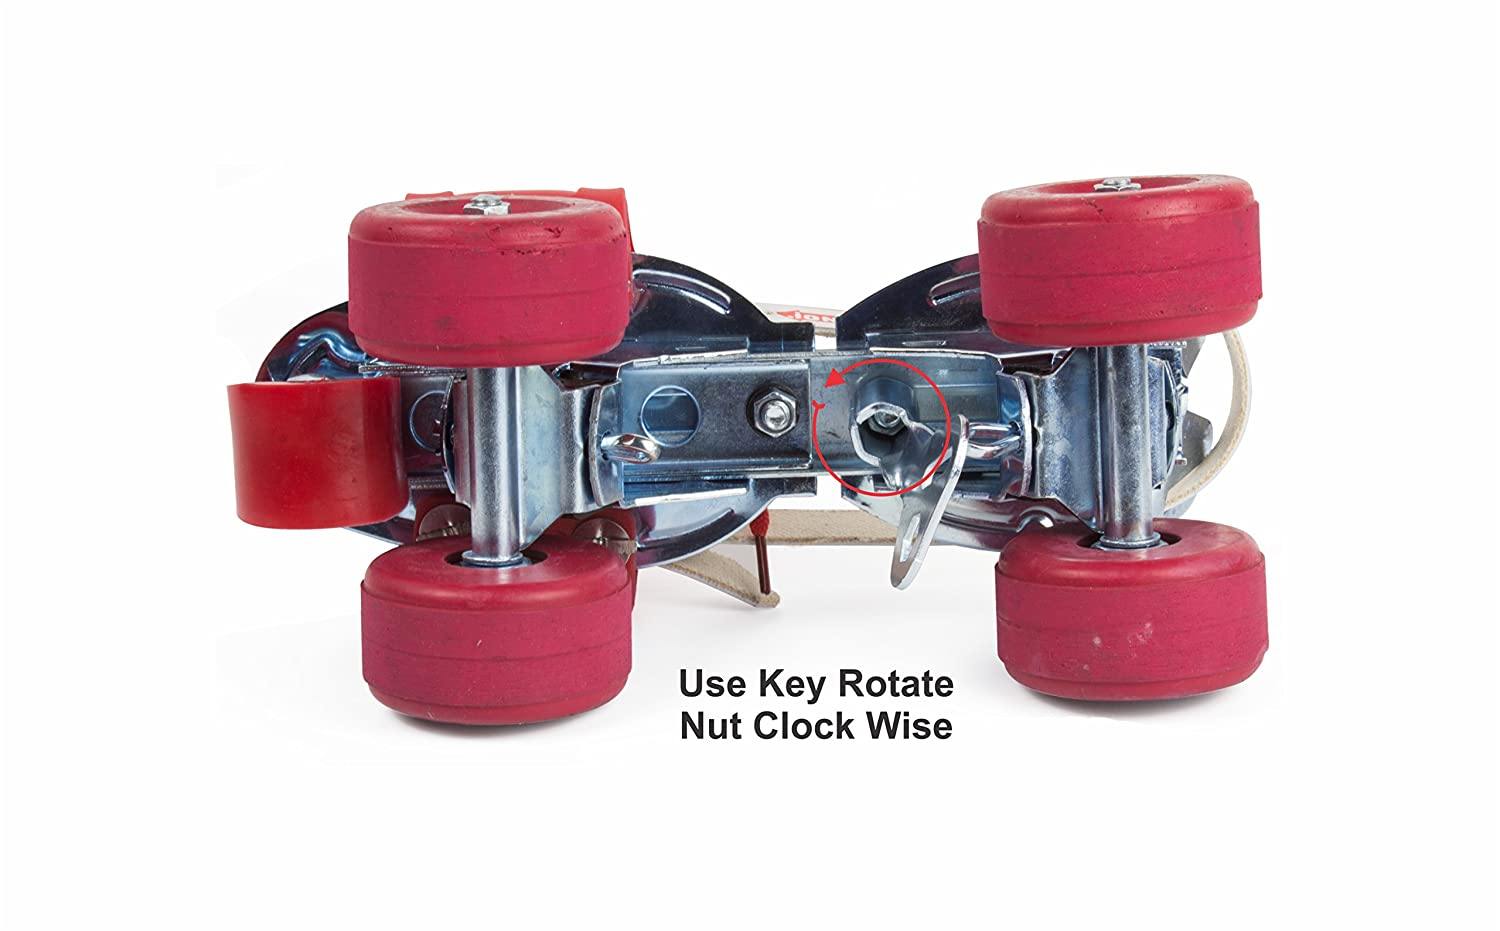 JJ Jonex Roller Skates Baby Tenacity (4-7 Year) - Best Price online Prokicksports.com